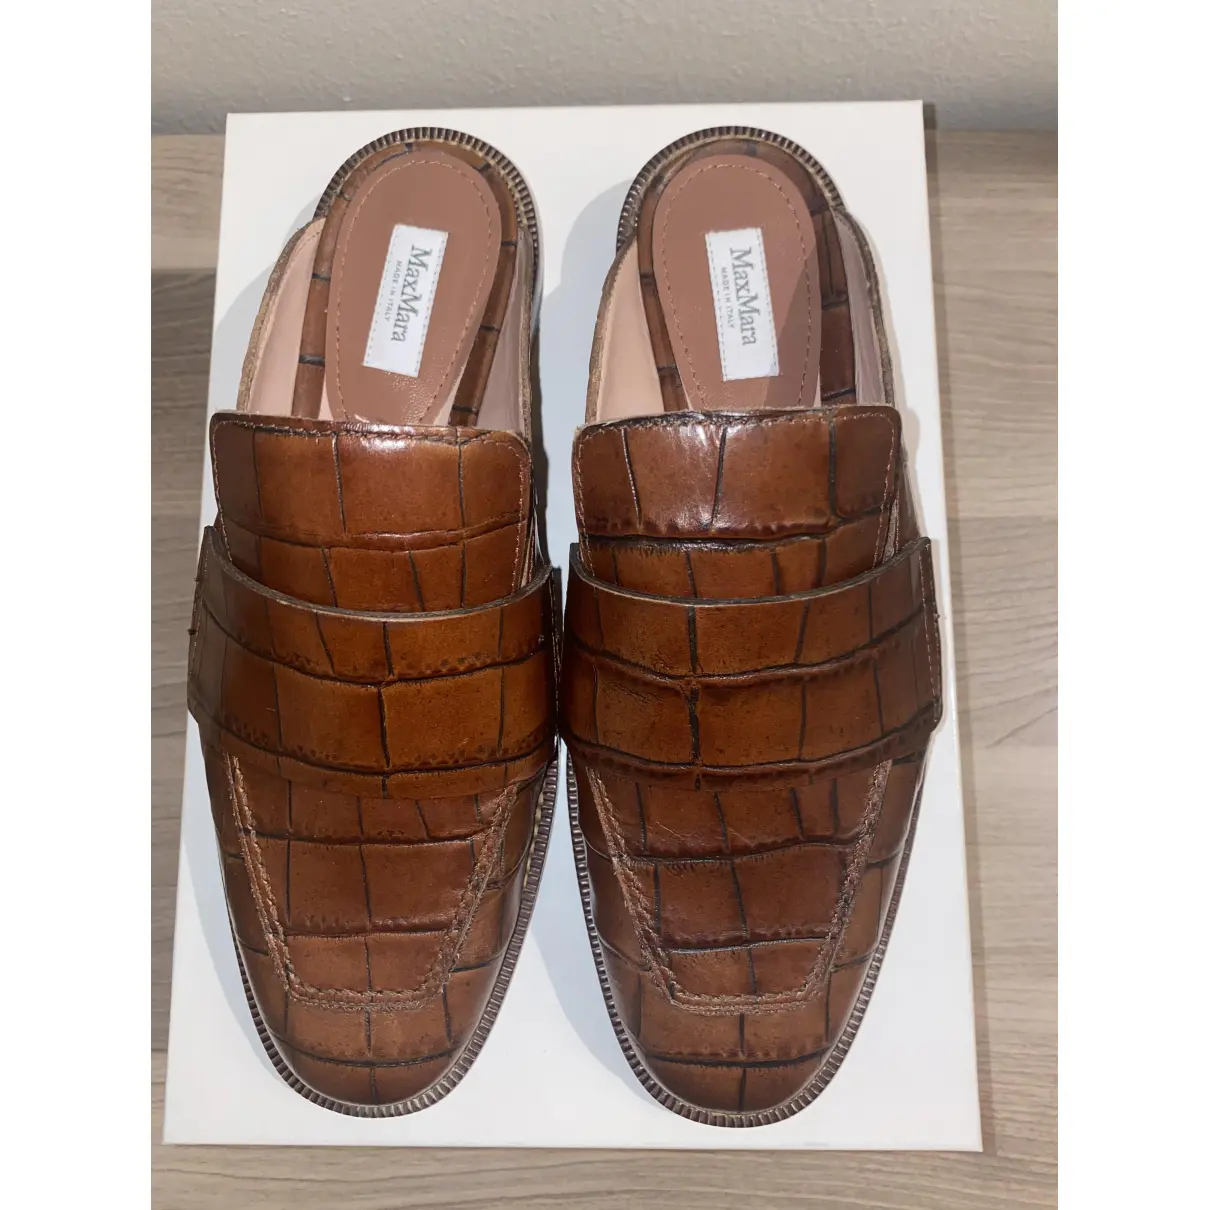 Buy Max Mara Max Mara Atelier leather sandals online